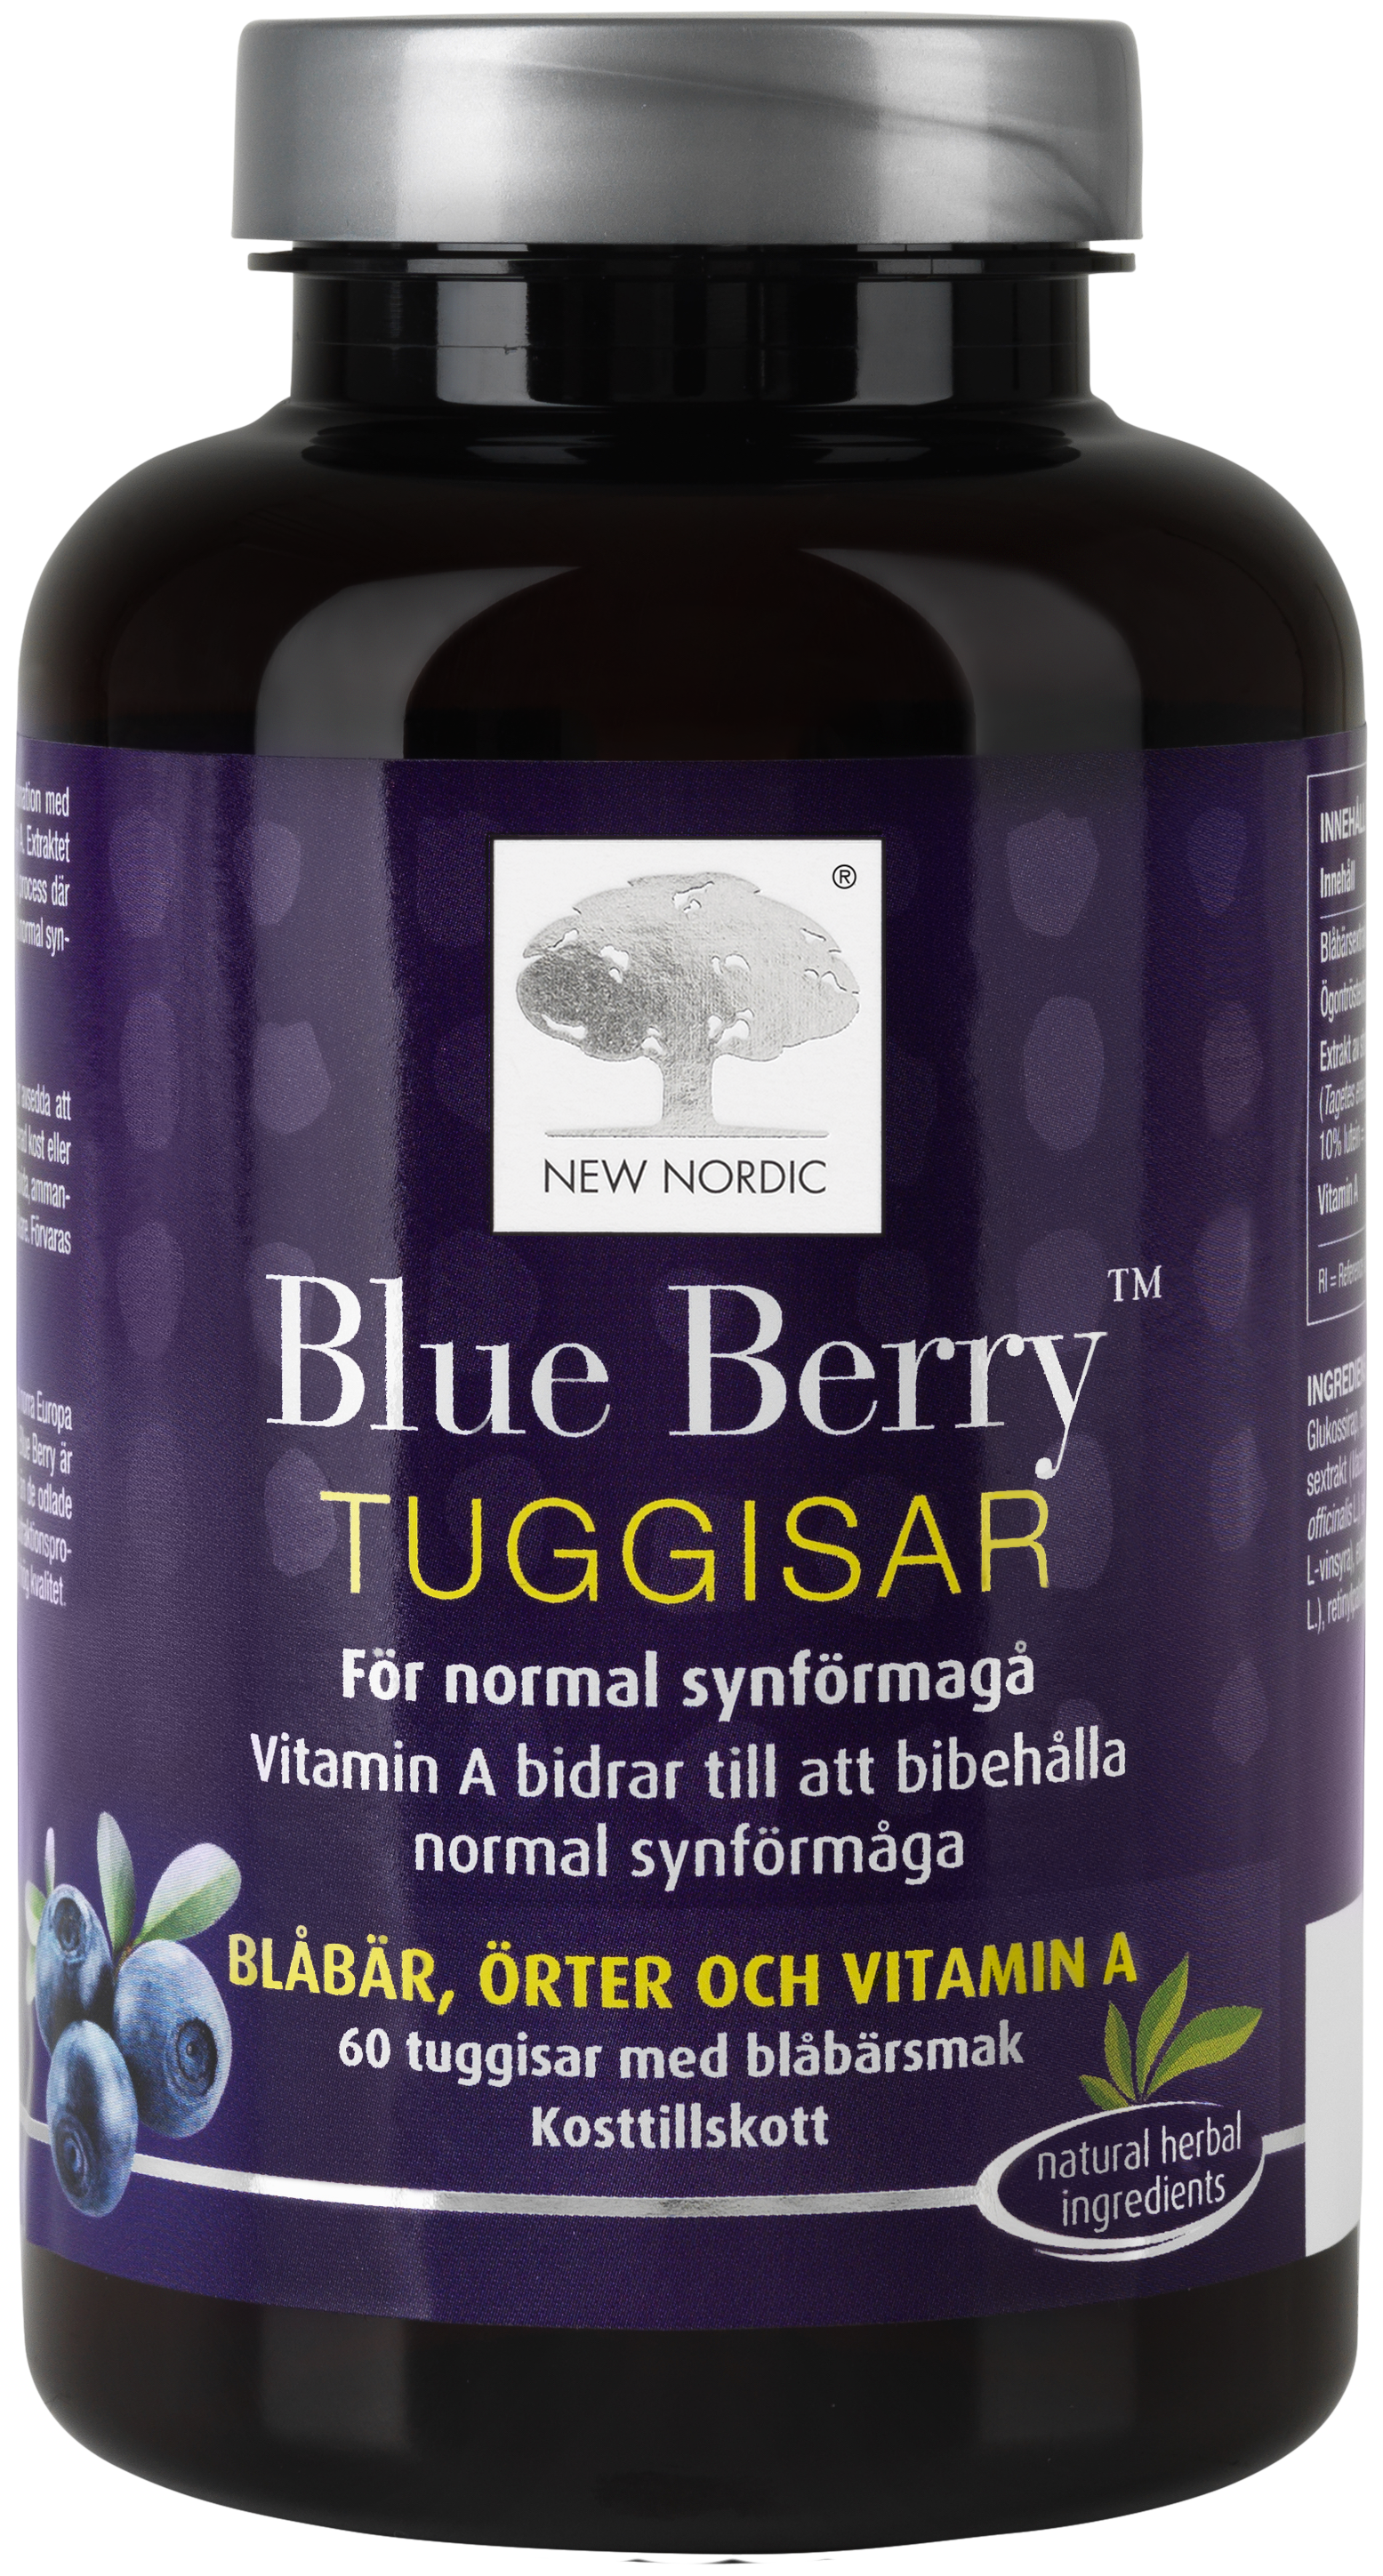 New Nordic Blue Berry tuggisar 60 st